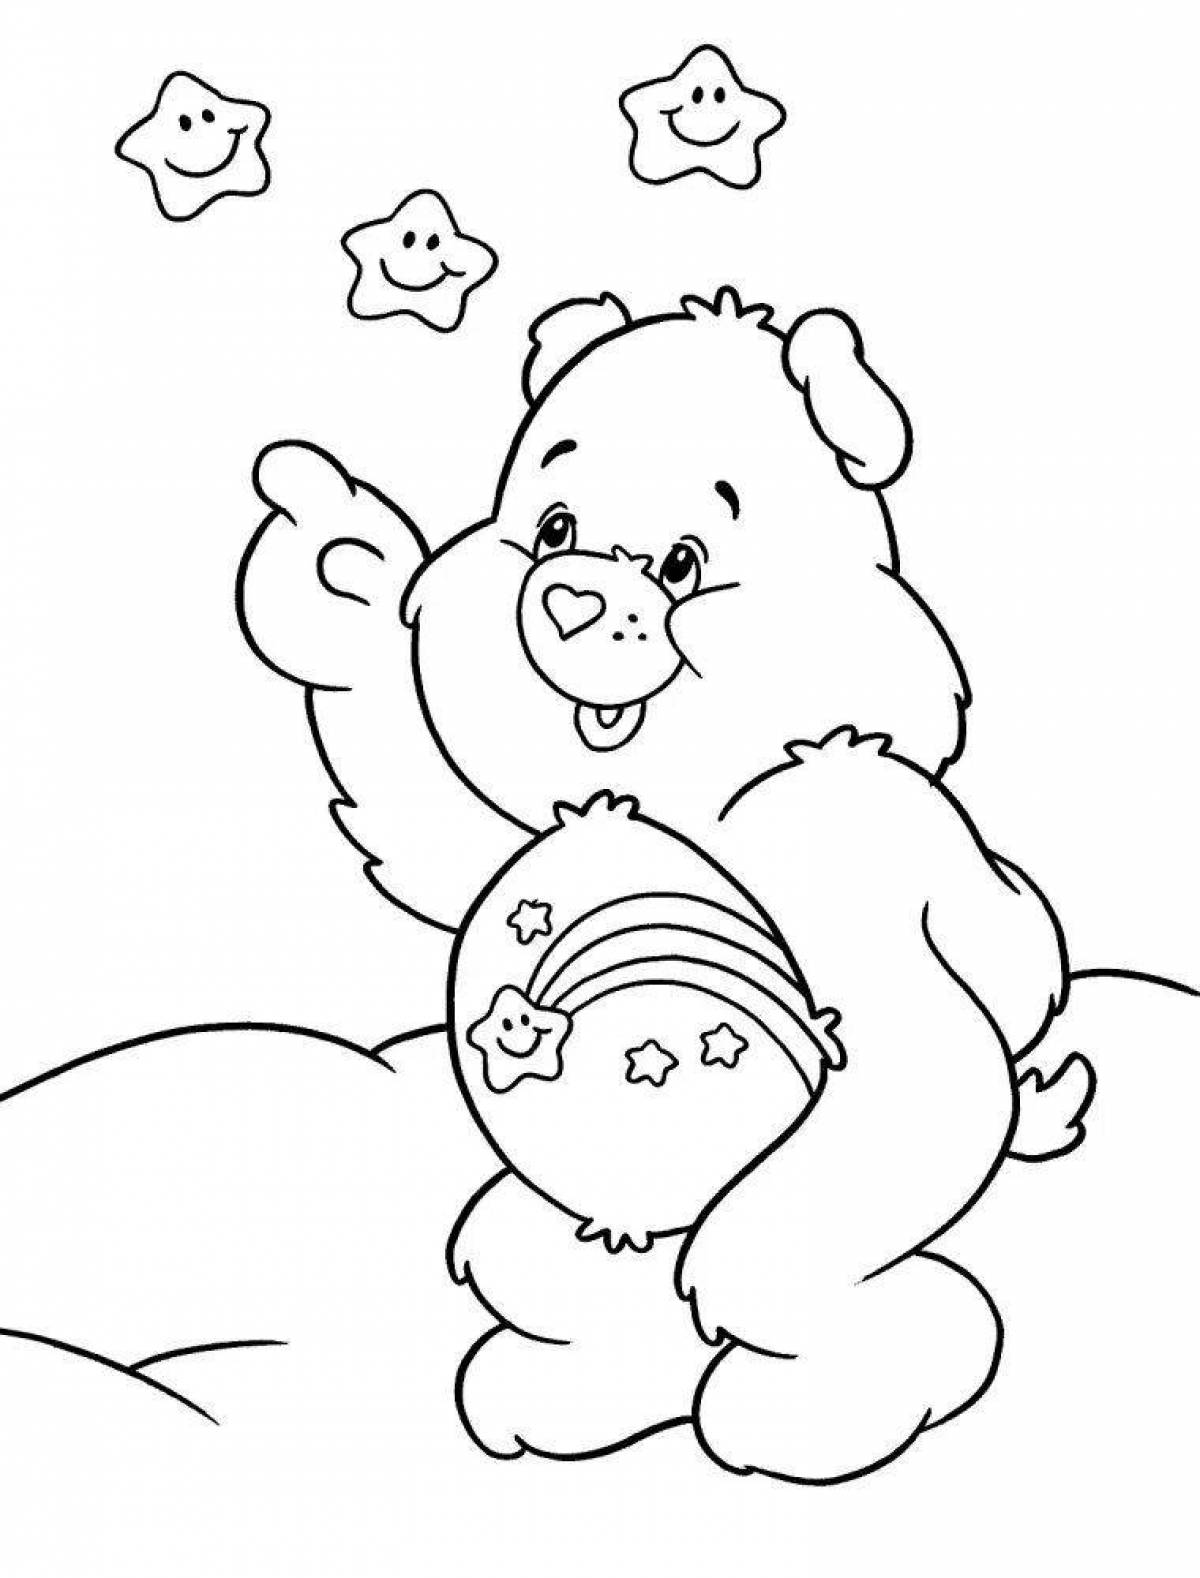 Care bears #4